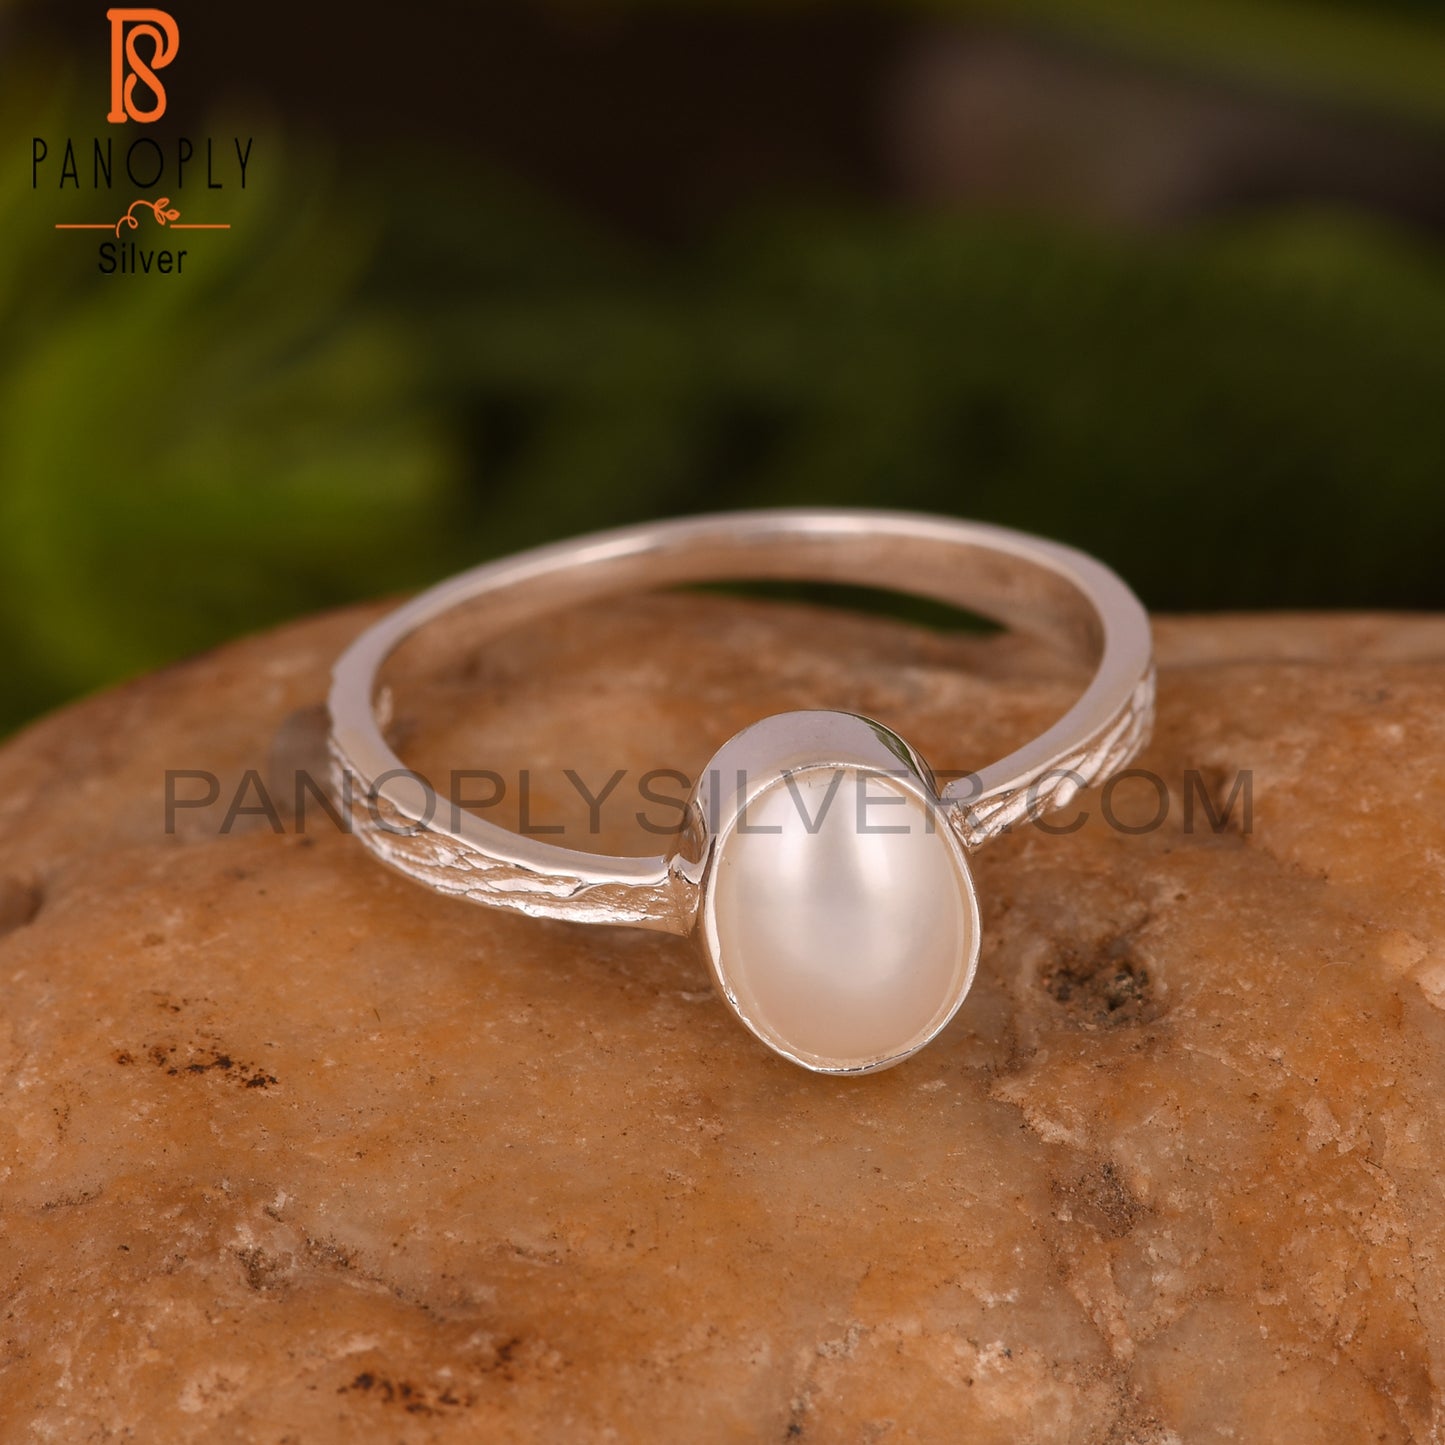 Pearl Gemstone 925 Sterling Silver Ring